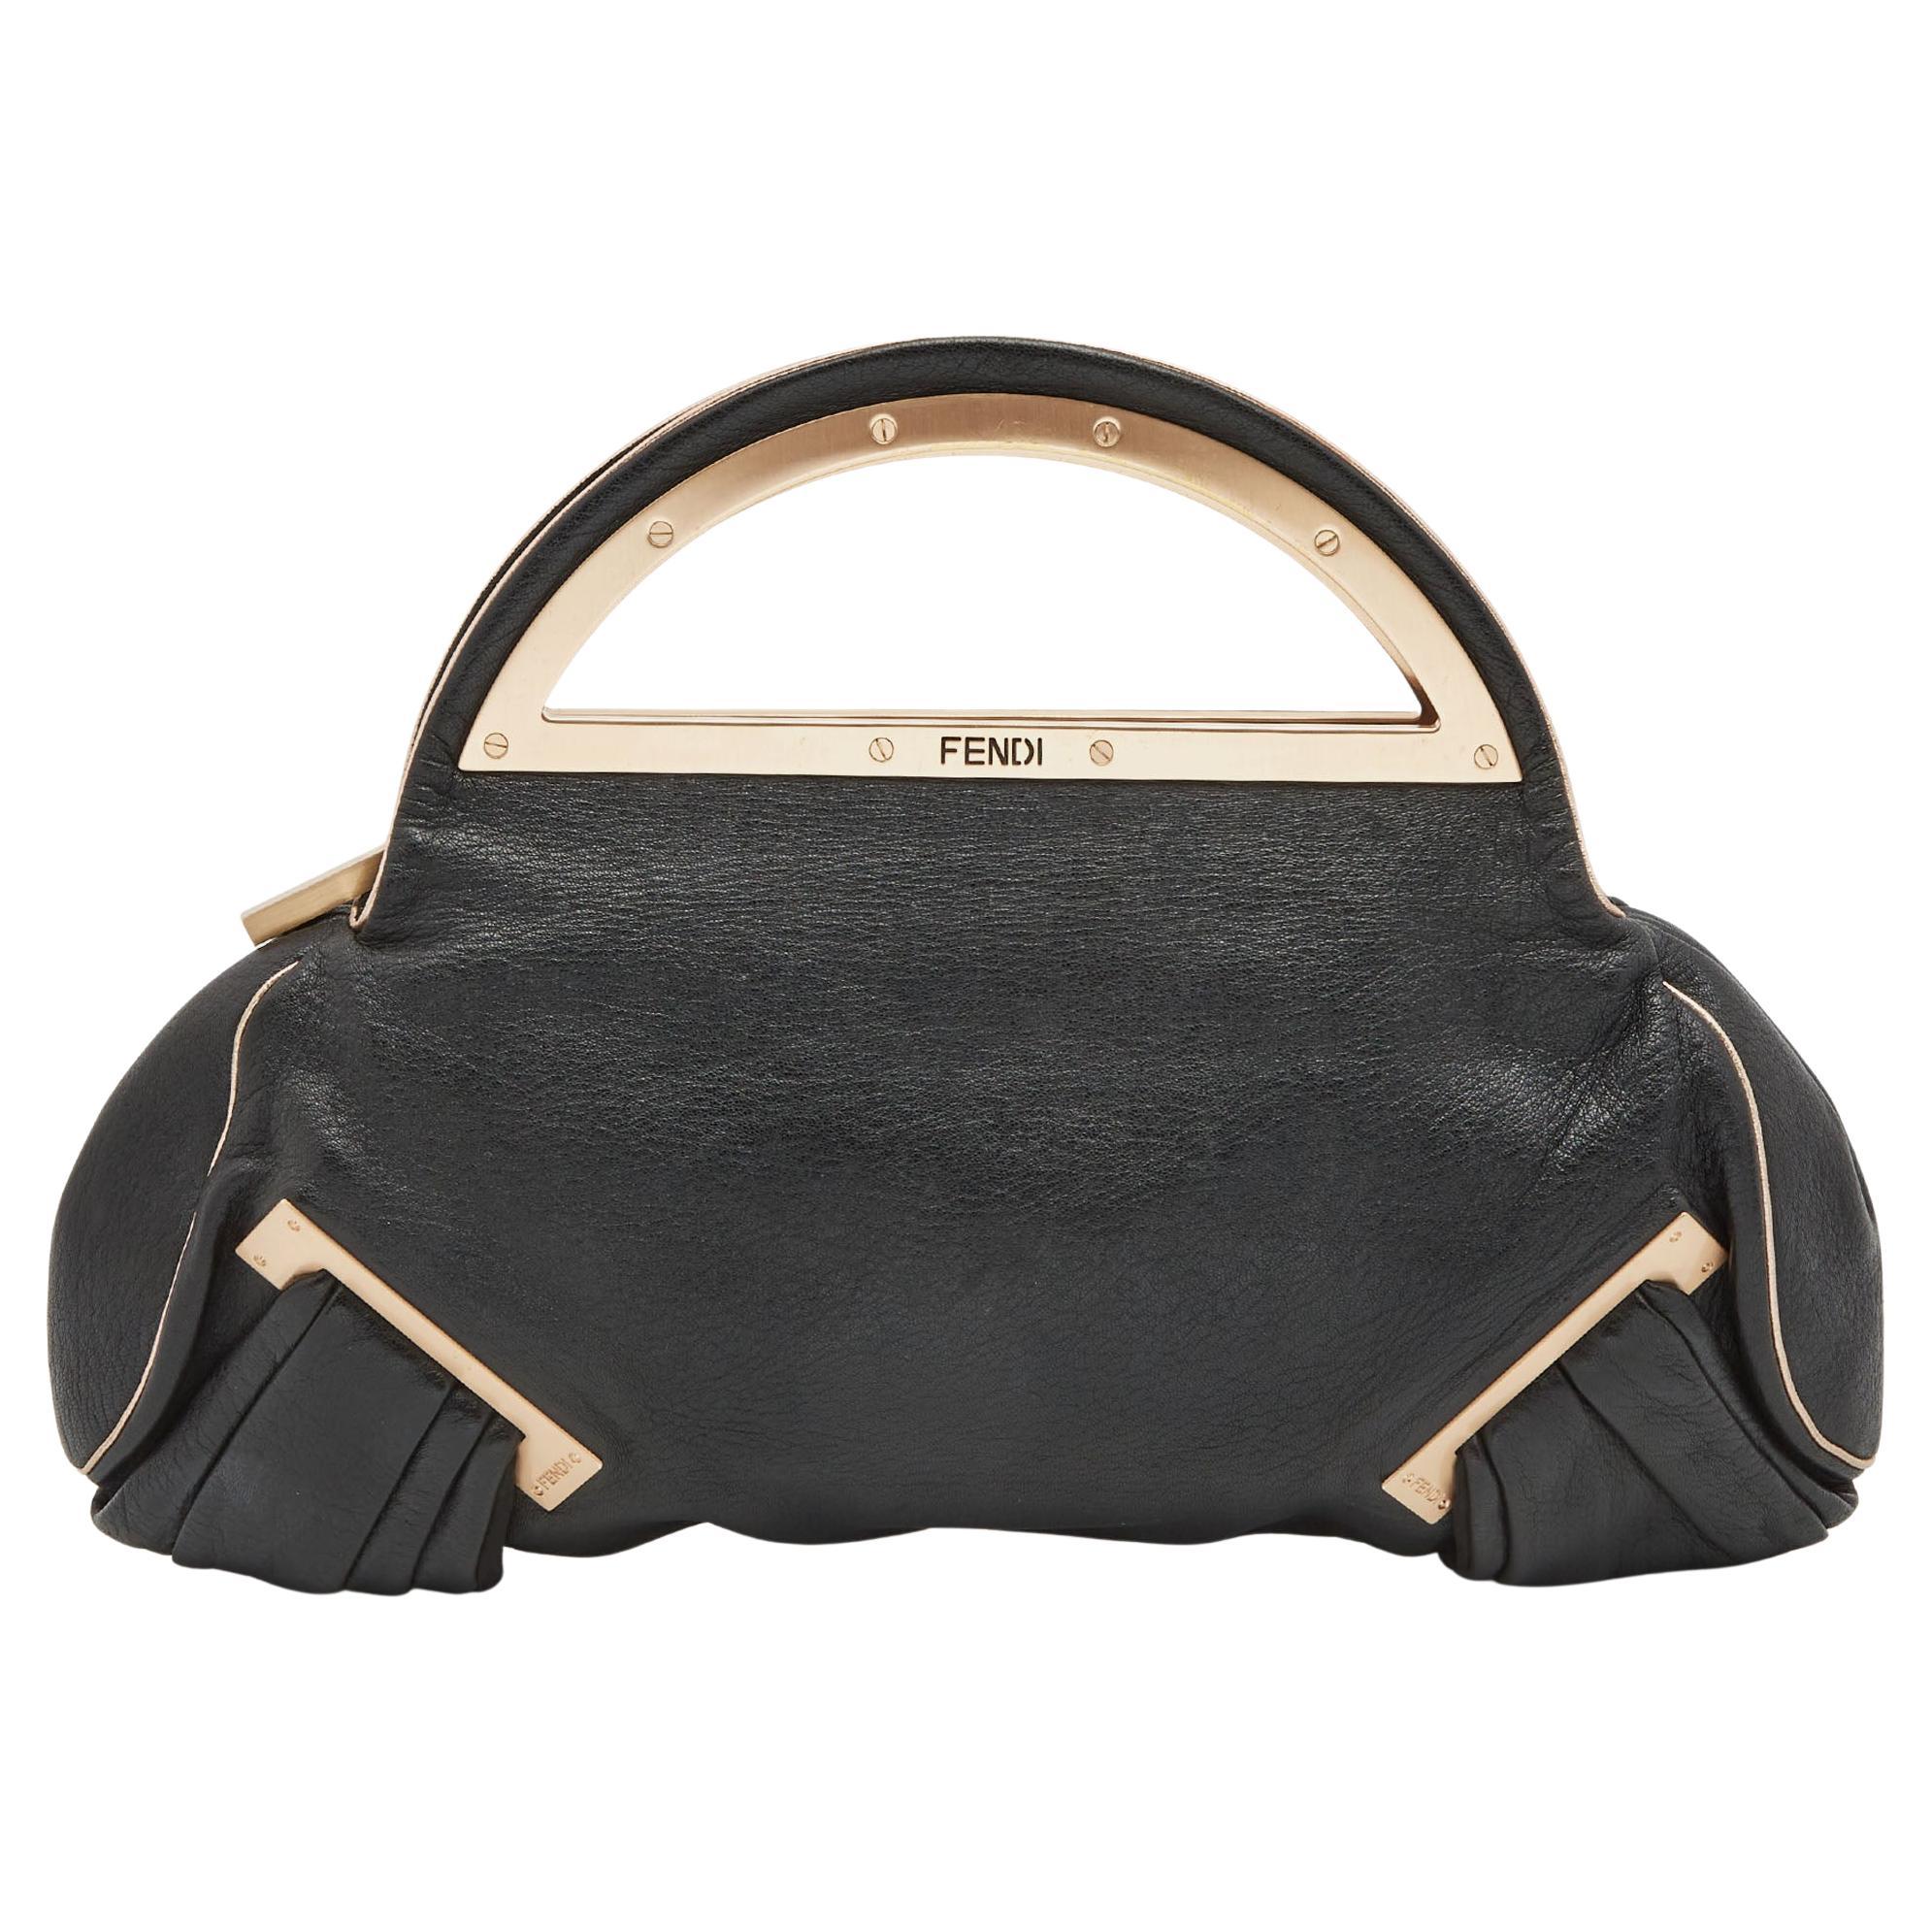 Fendi Black Leather Cut Out Handle Clutch Bag